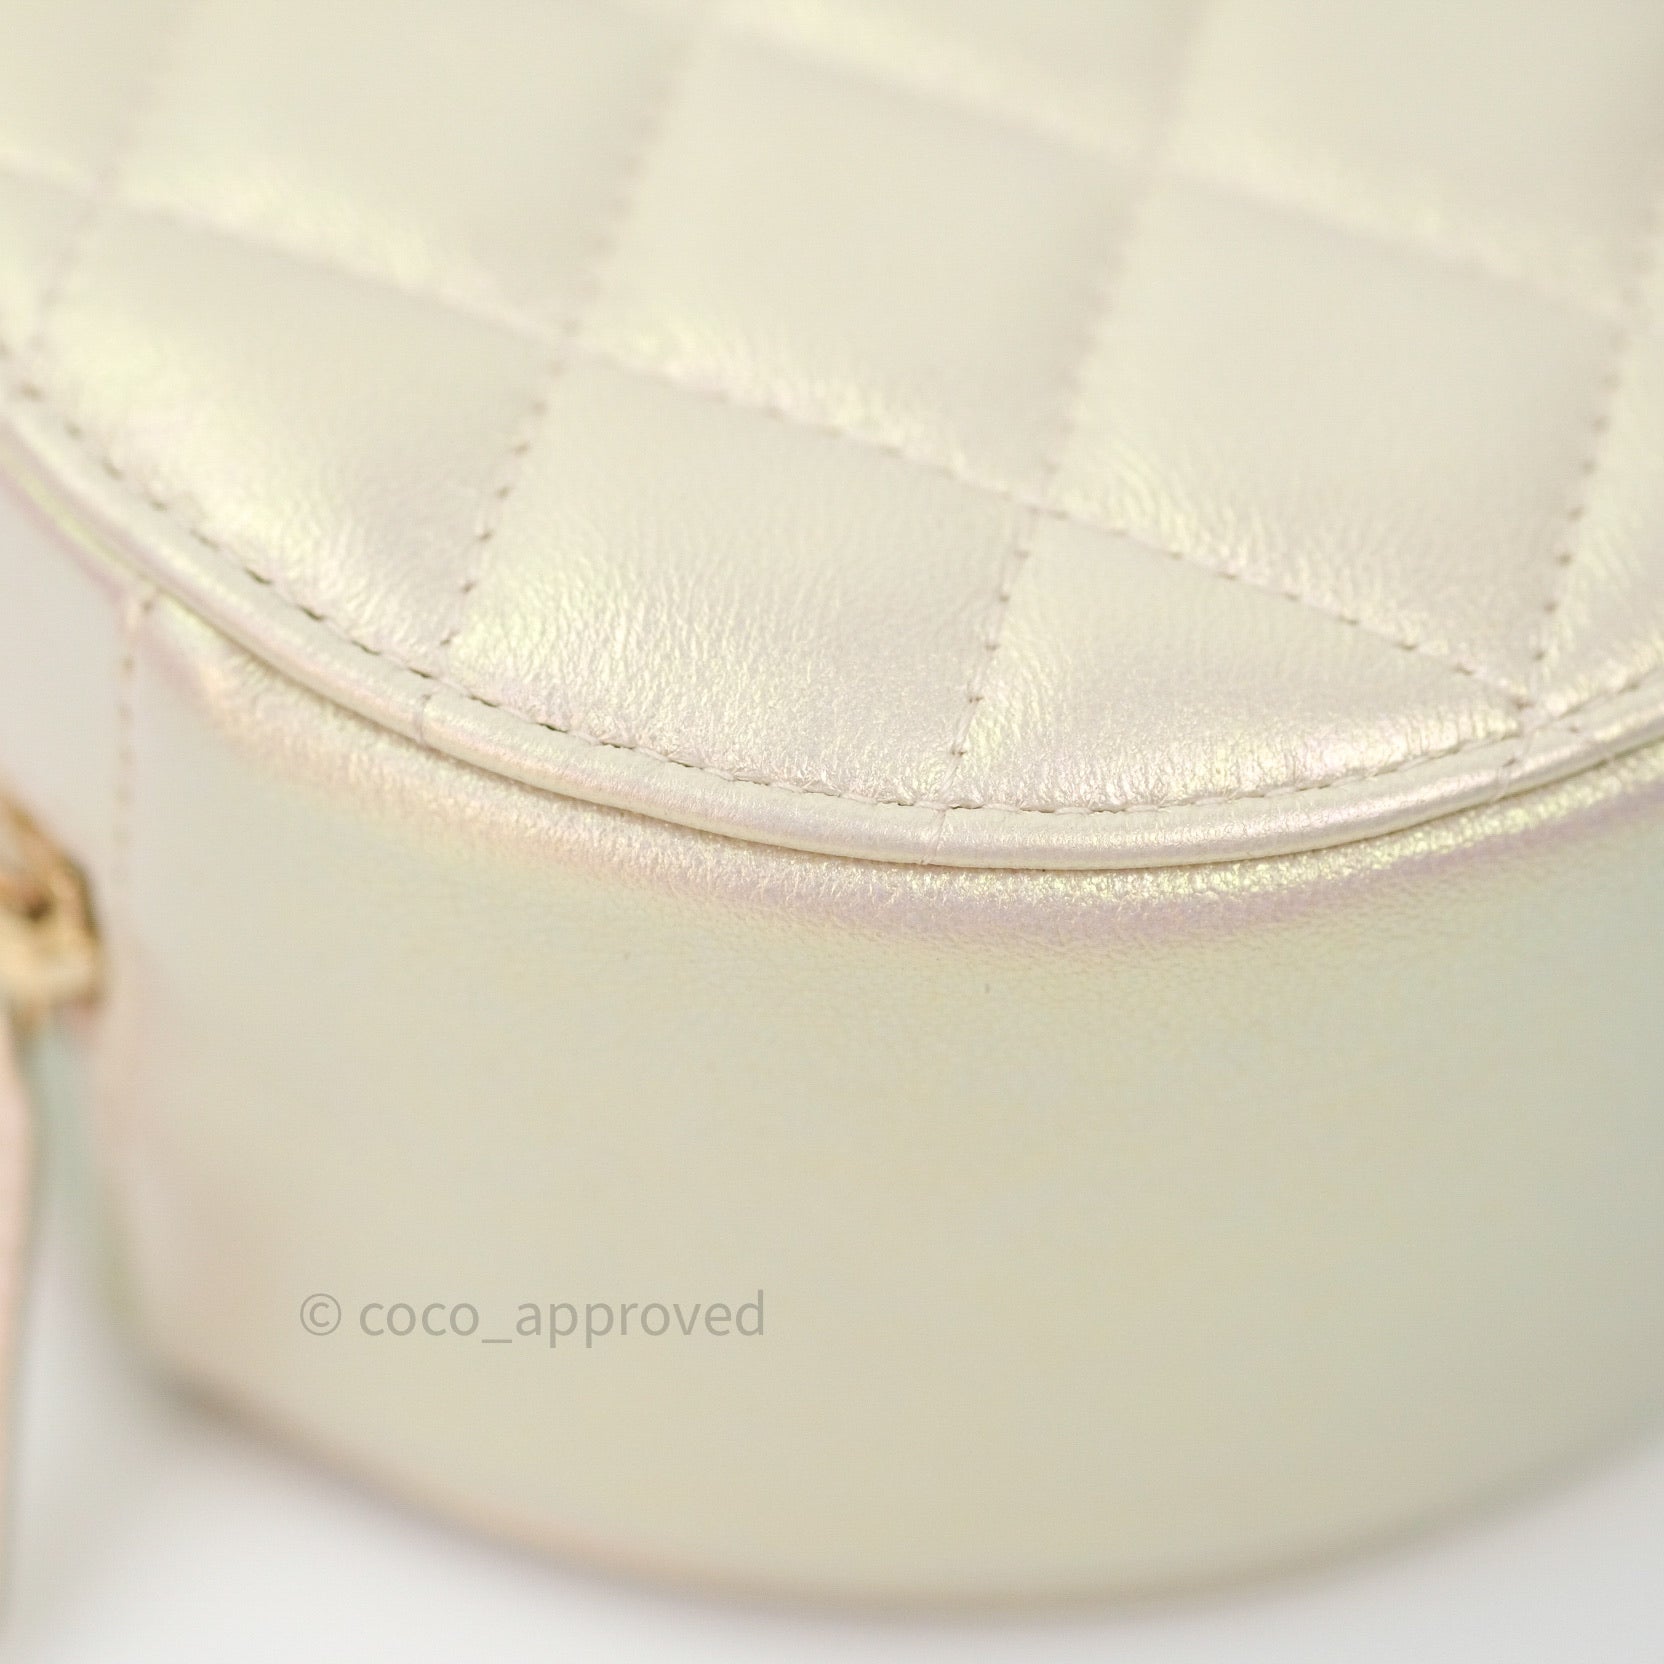 Chanel Iridescent Bag - 66 For Sale on 1stDibs